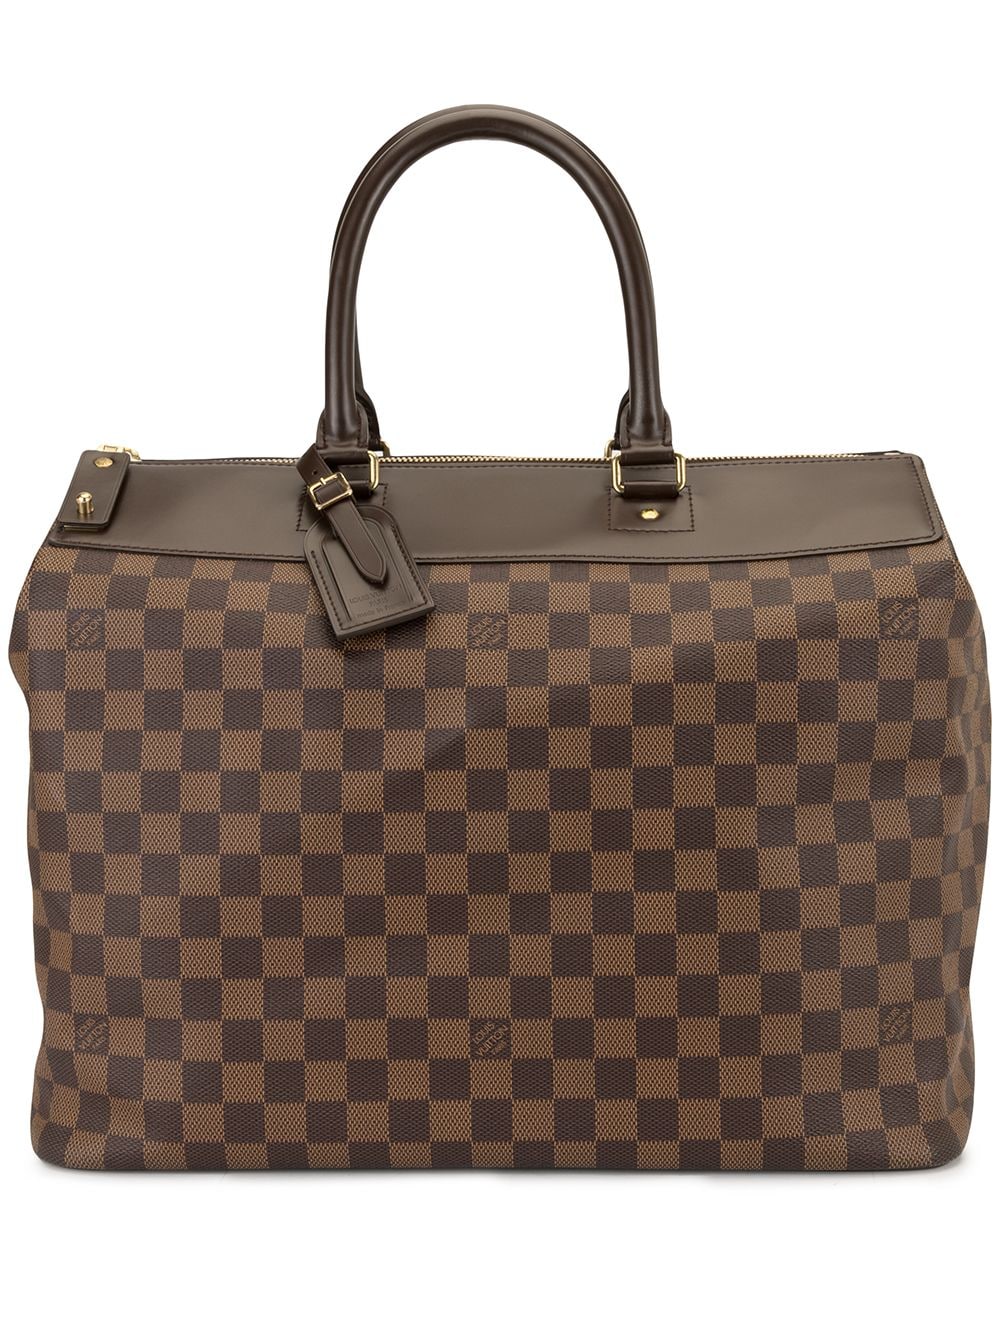 Louis Vuitton Greenwich Pm Travel Bag In Brown | ModeSens